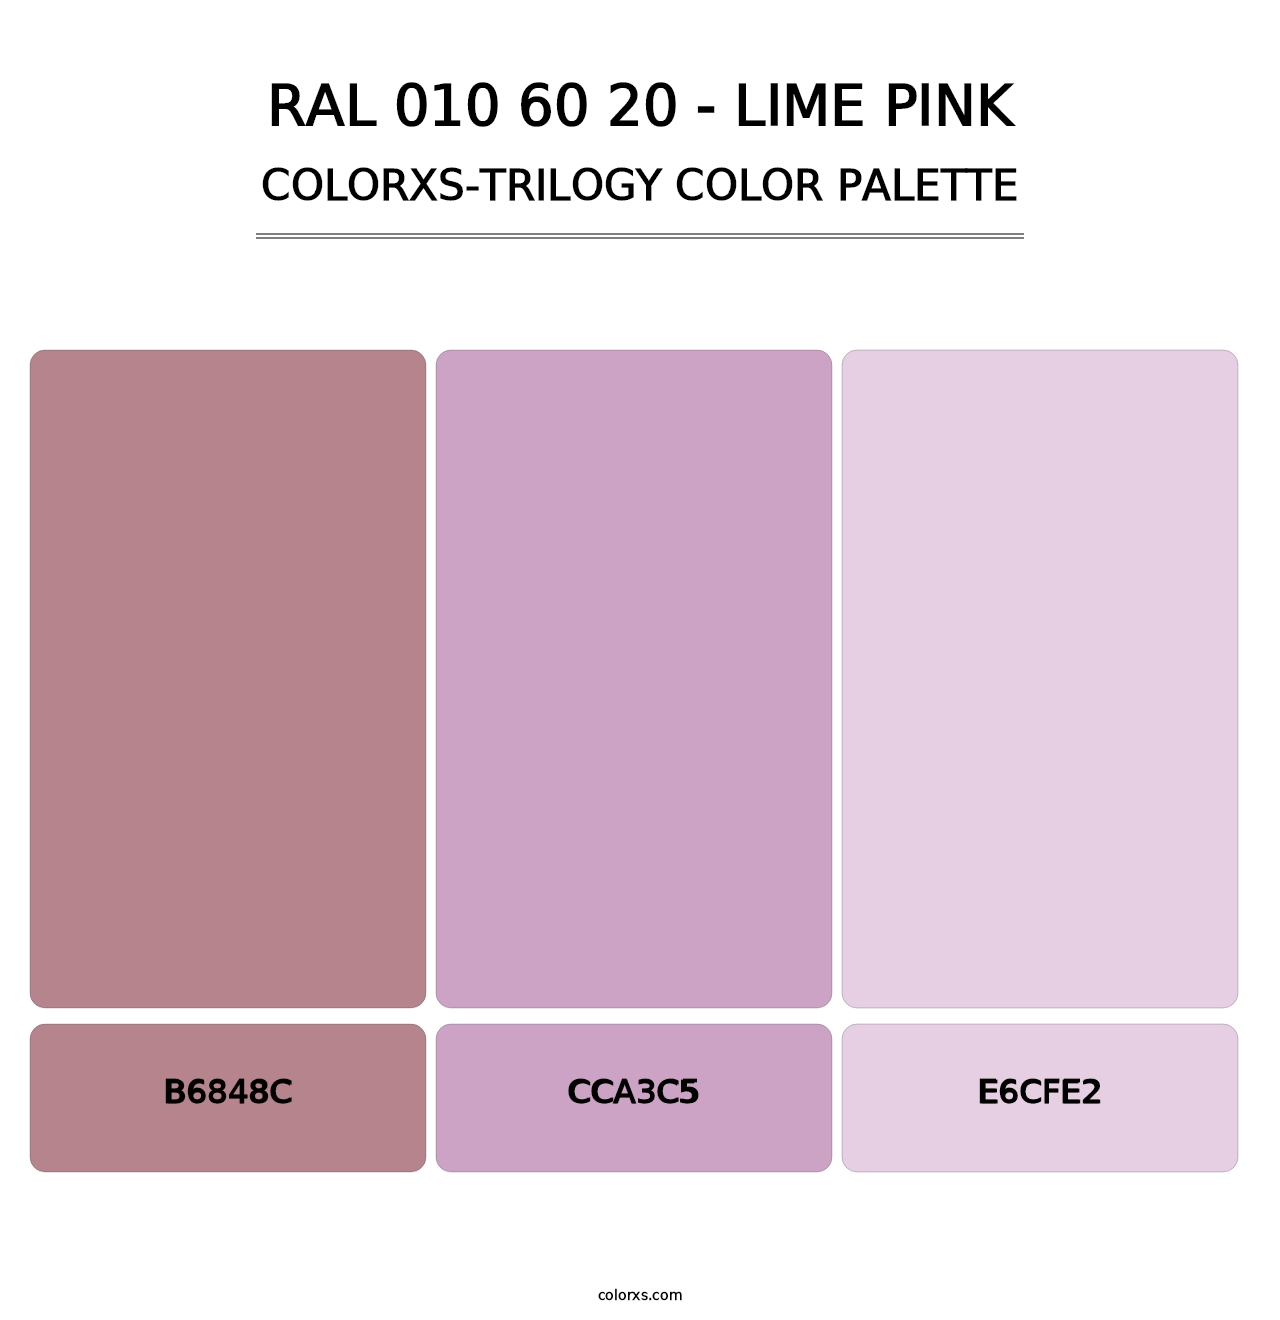 RAL 010 60 20 - Lime Pink - Colorxs Trilogy Palette